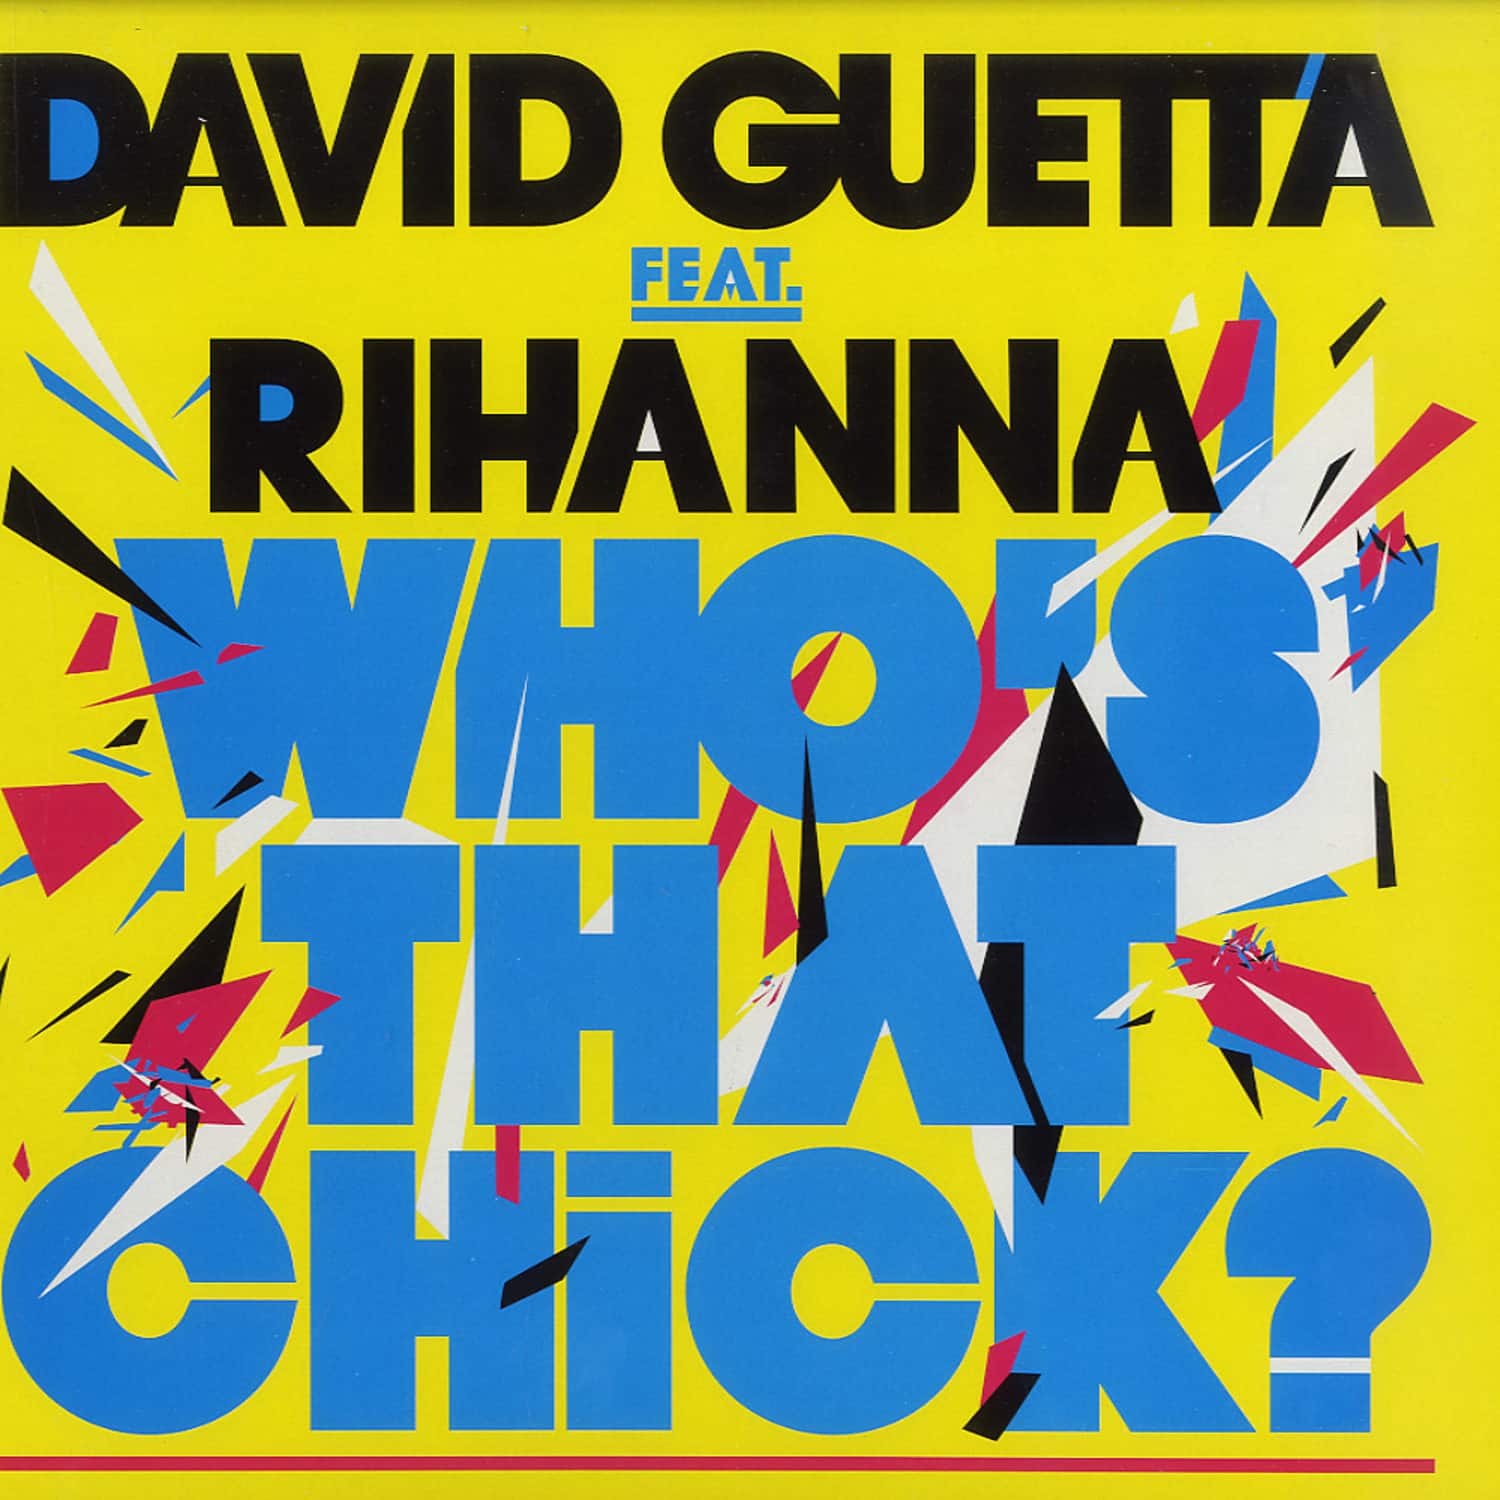 David Guetta ft. Rihanna - WHOS THAT CHICK? 